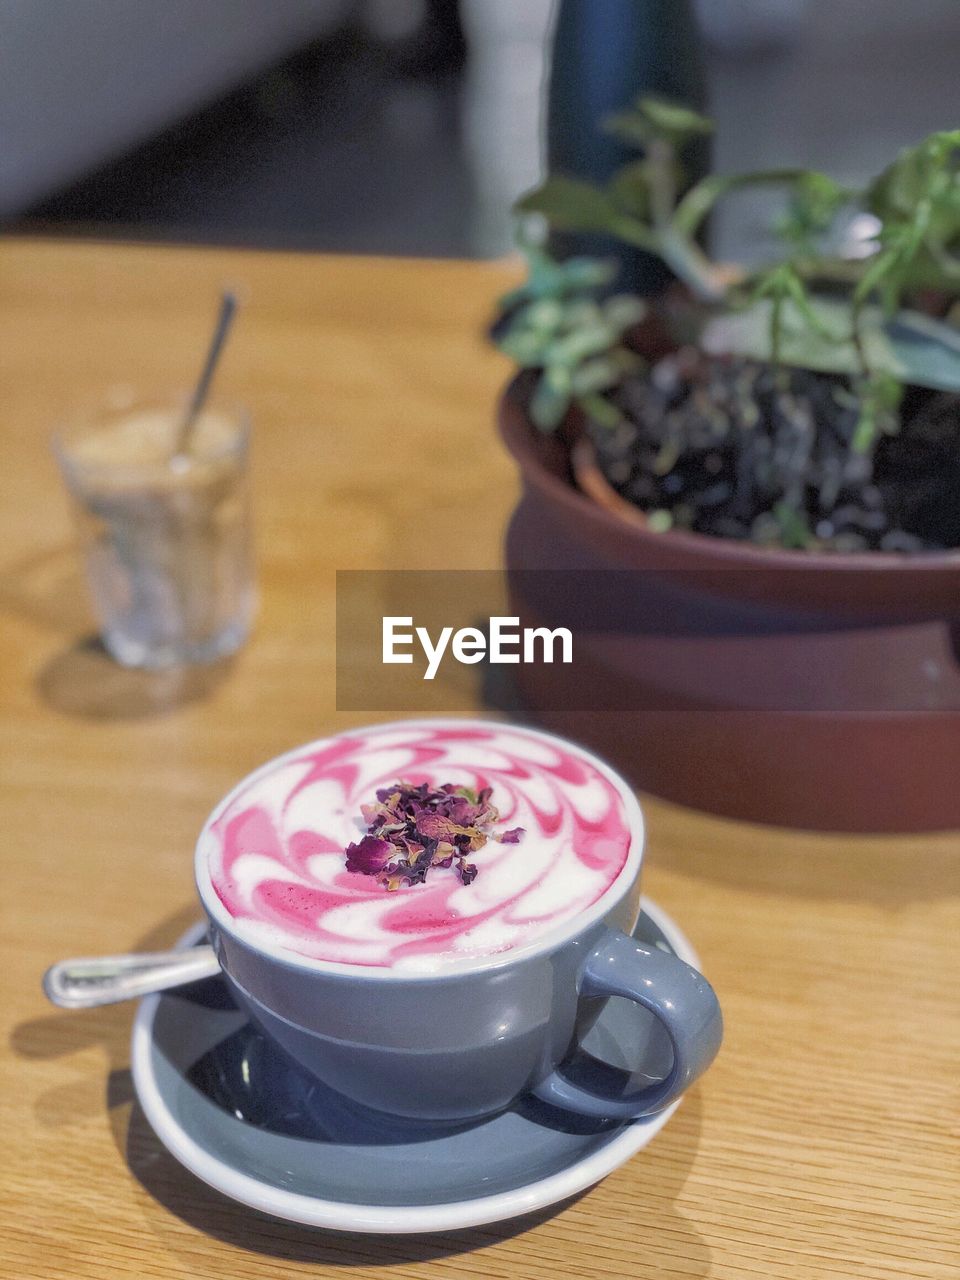 Beetroot latte art 